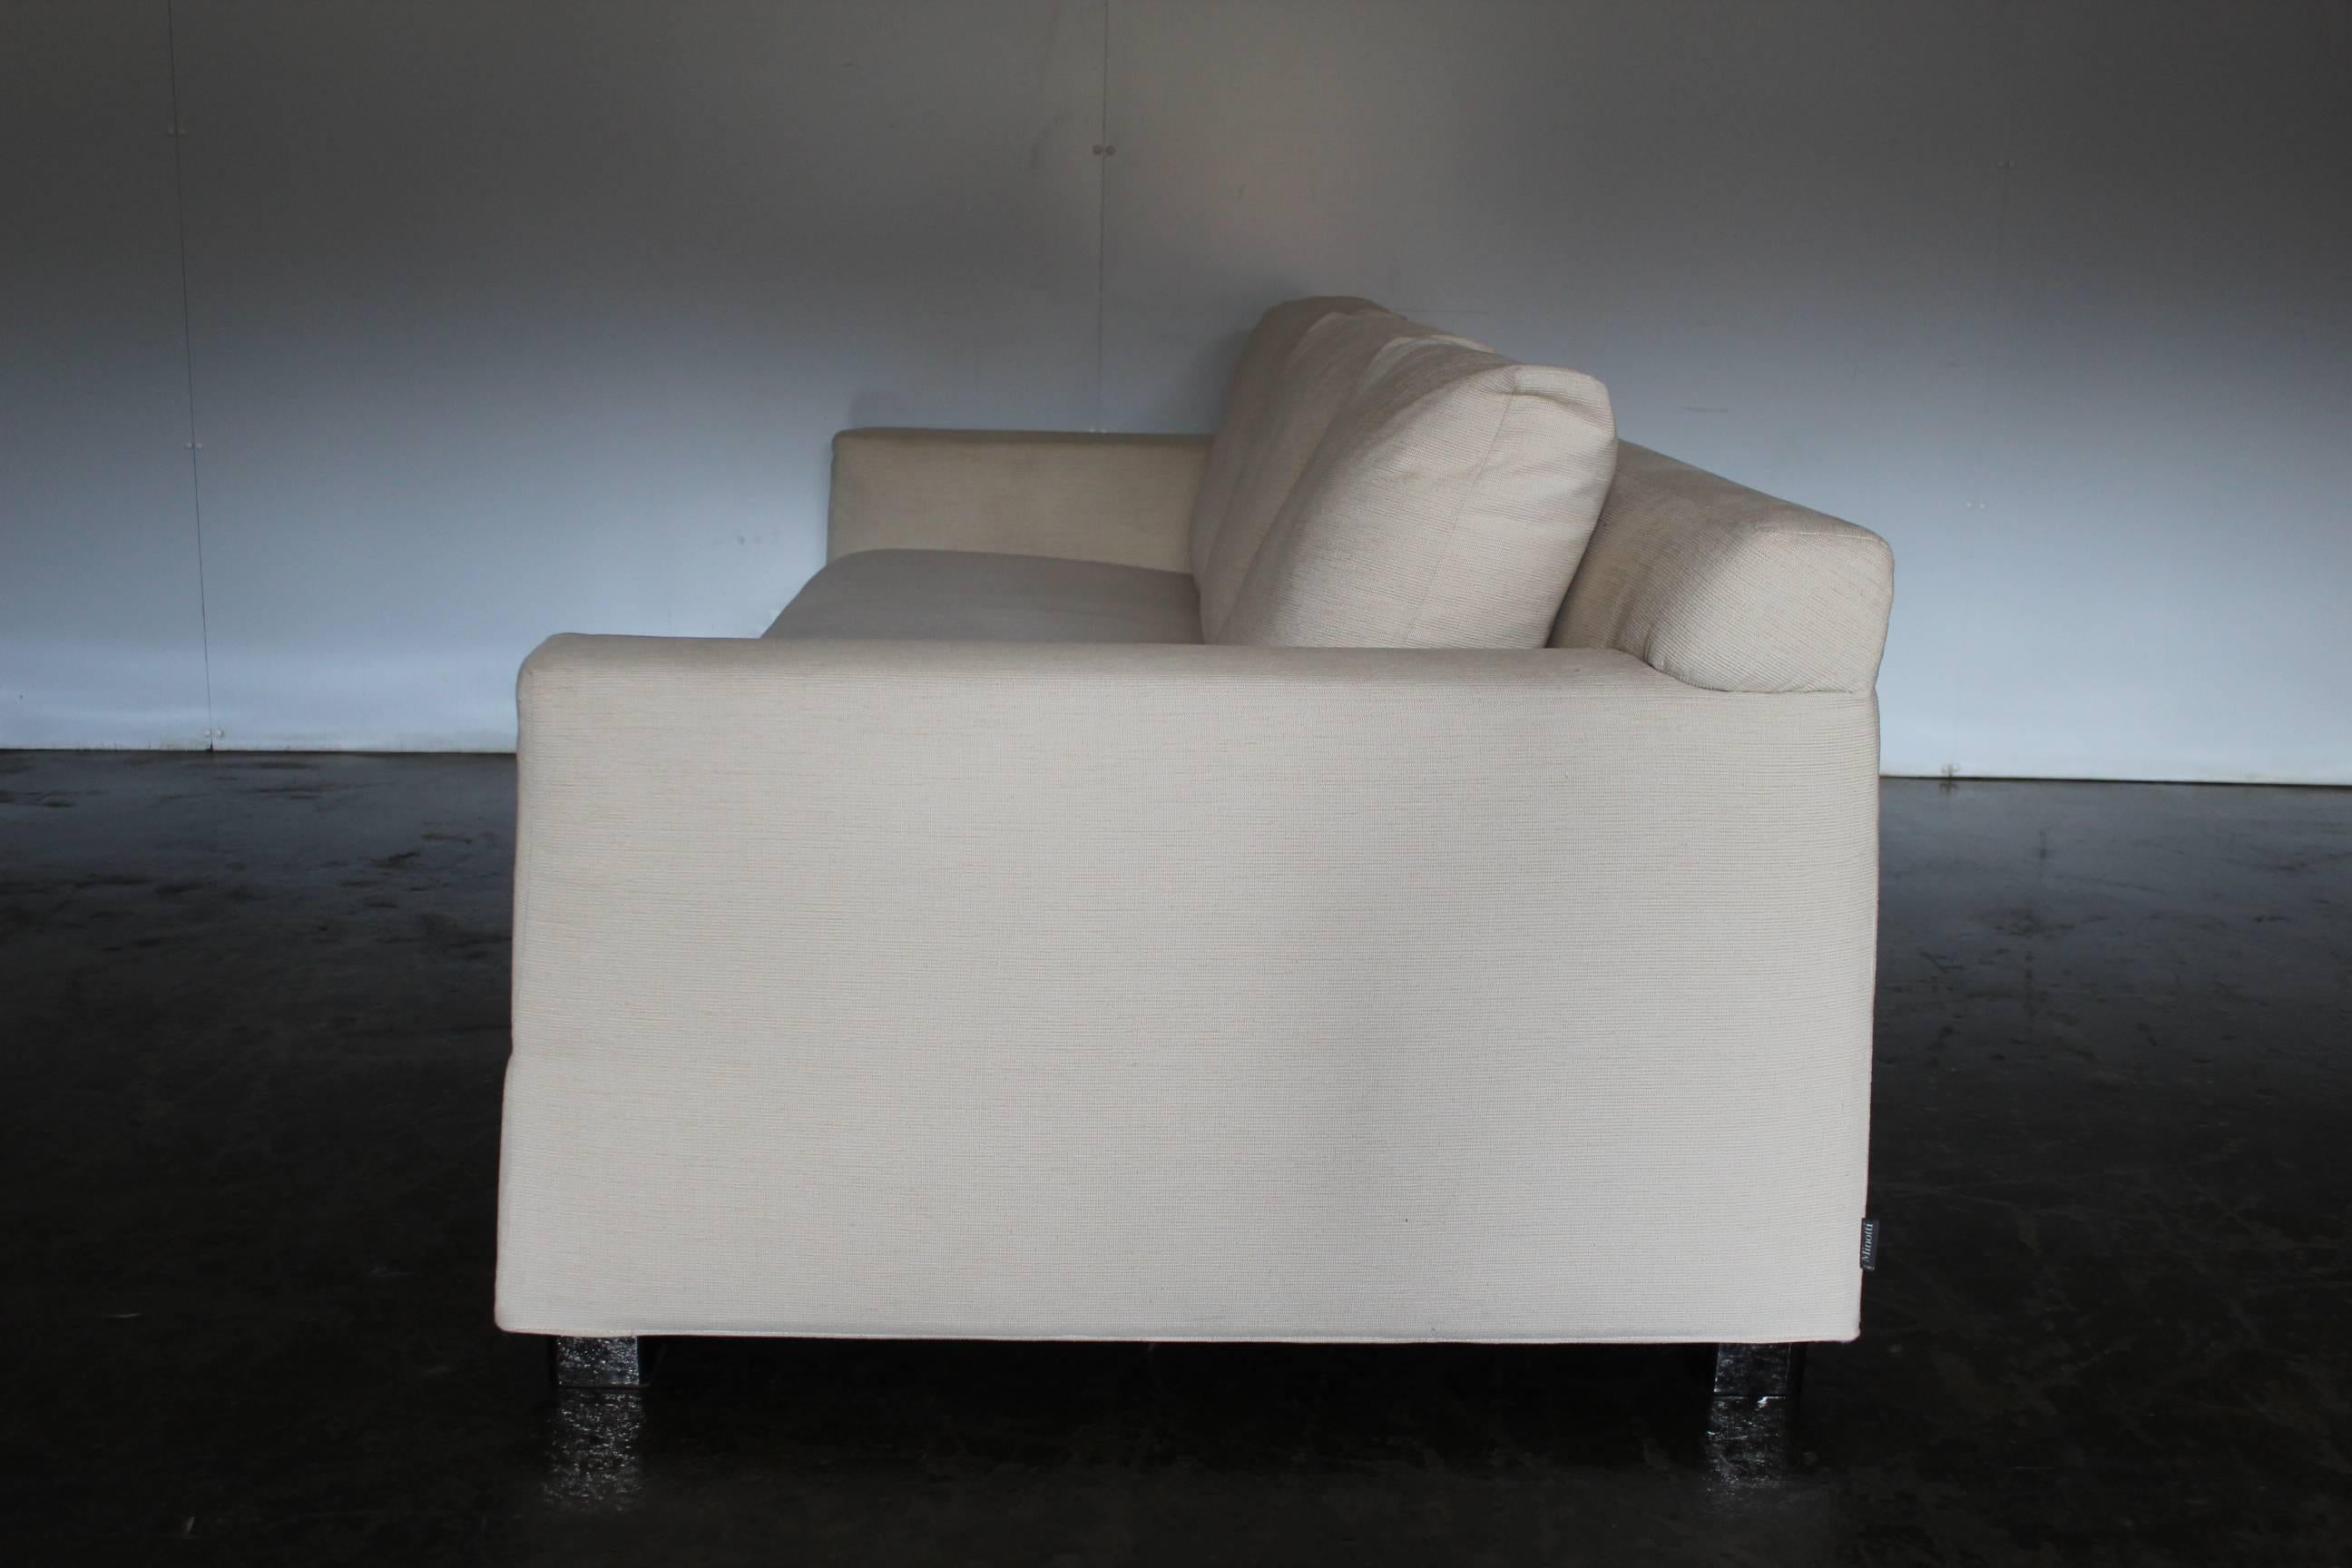 Modern Minotti “Gilbert” Three-Seat Sofa in Neutral Cream “Corda” Fabric